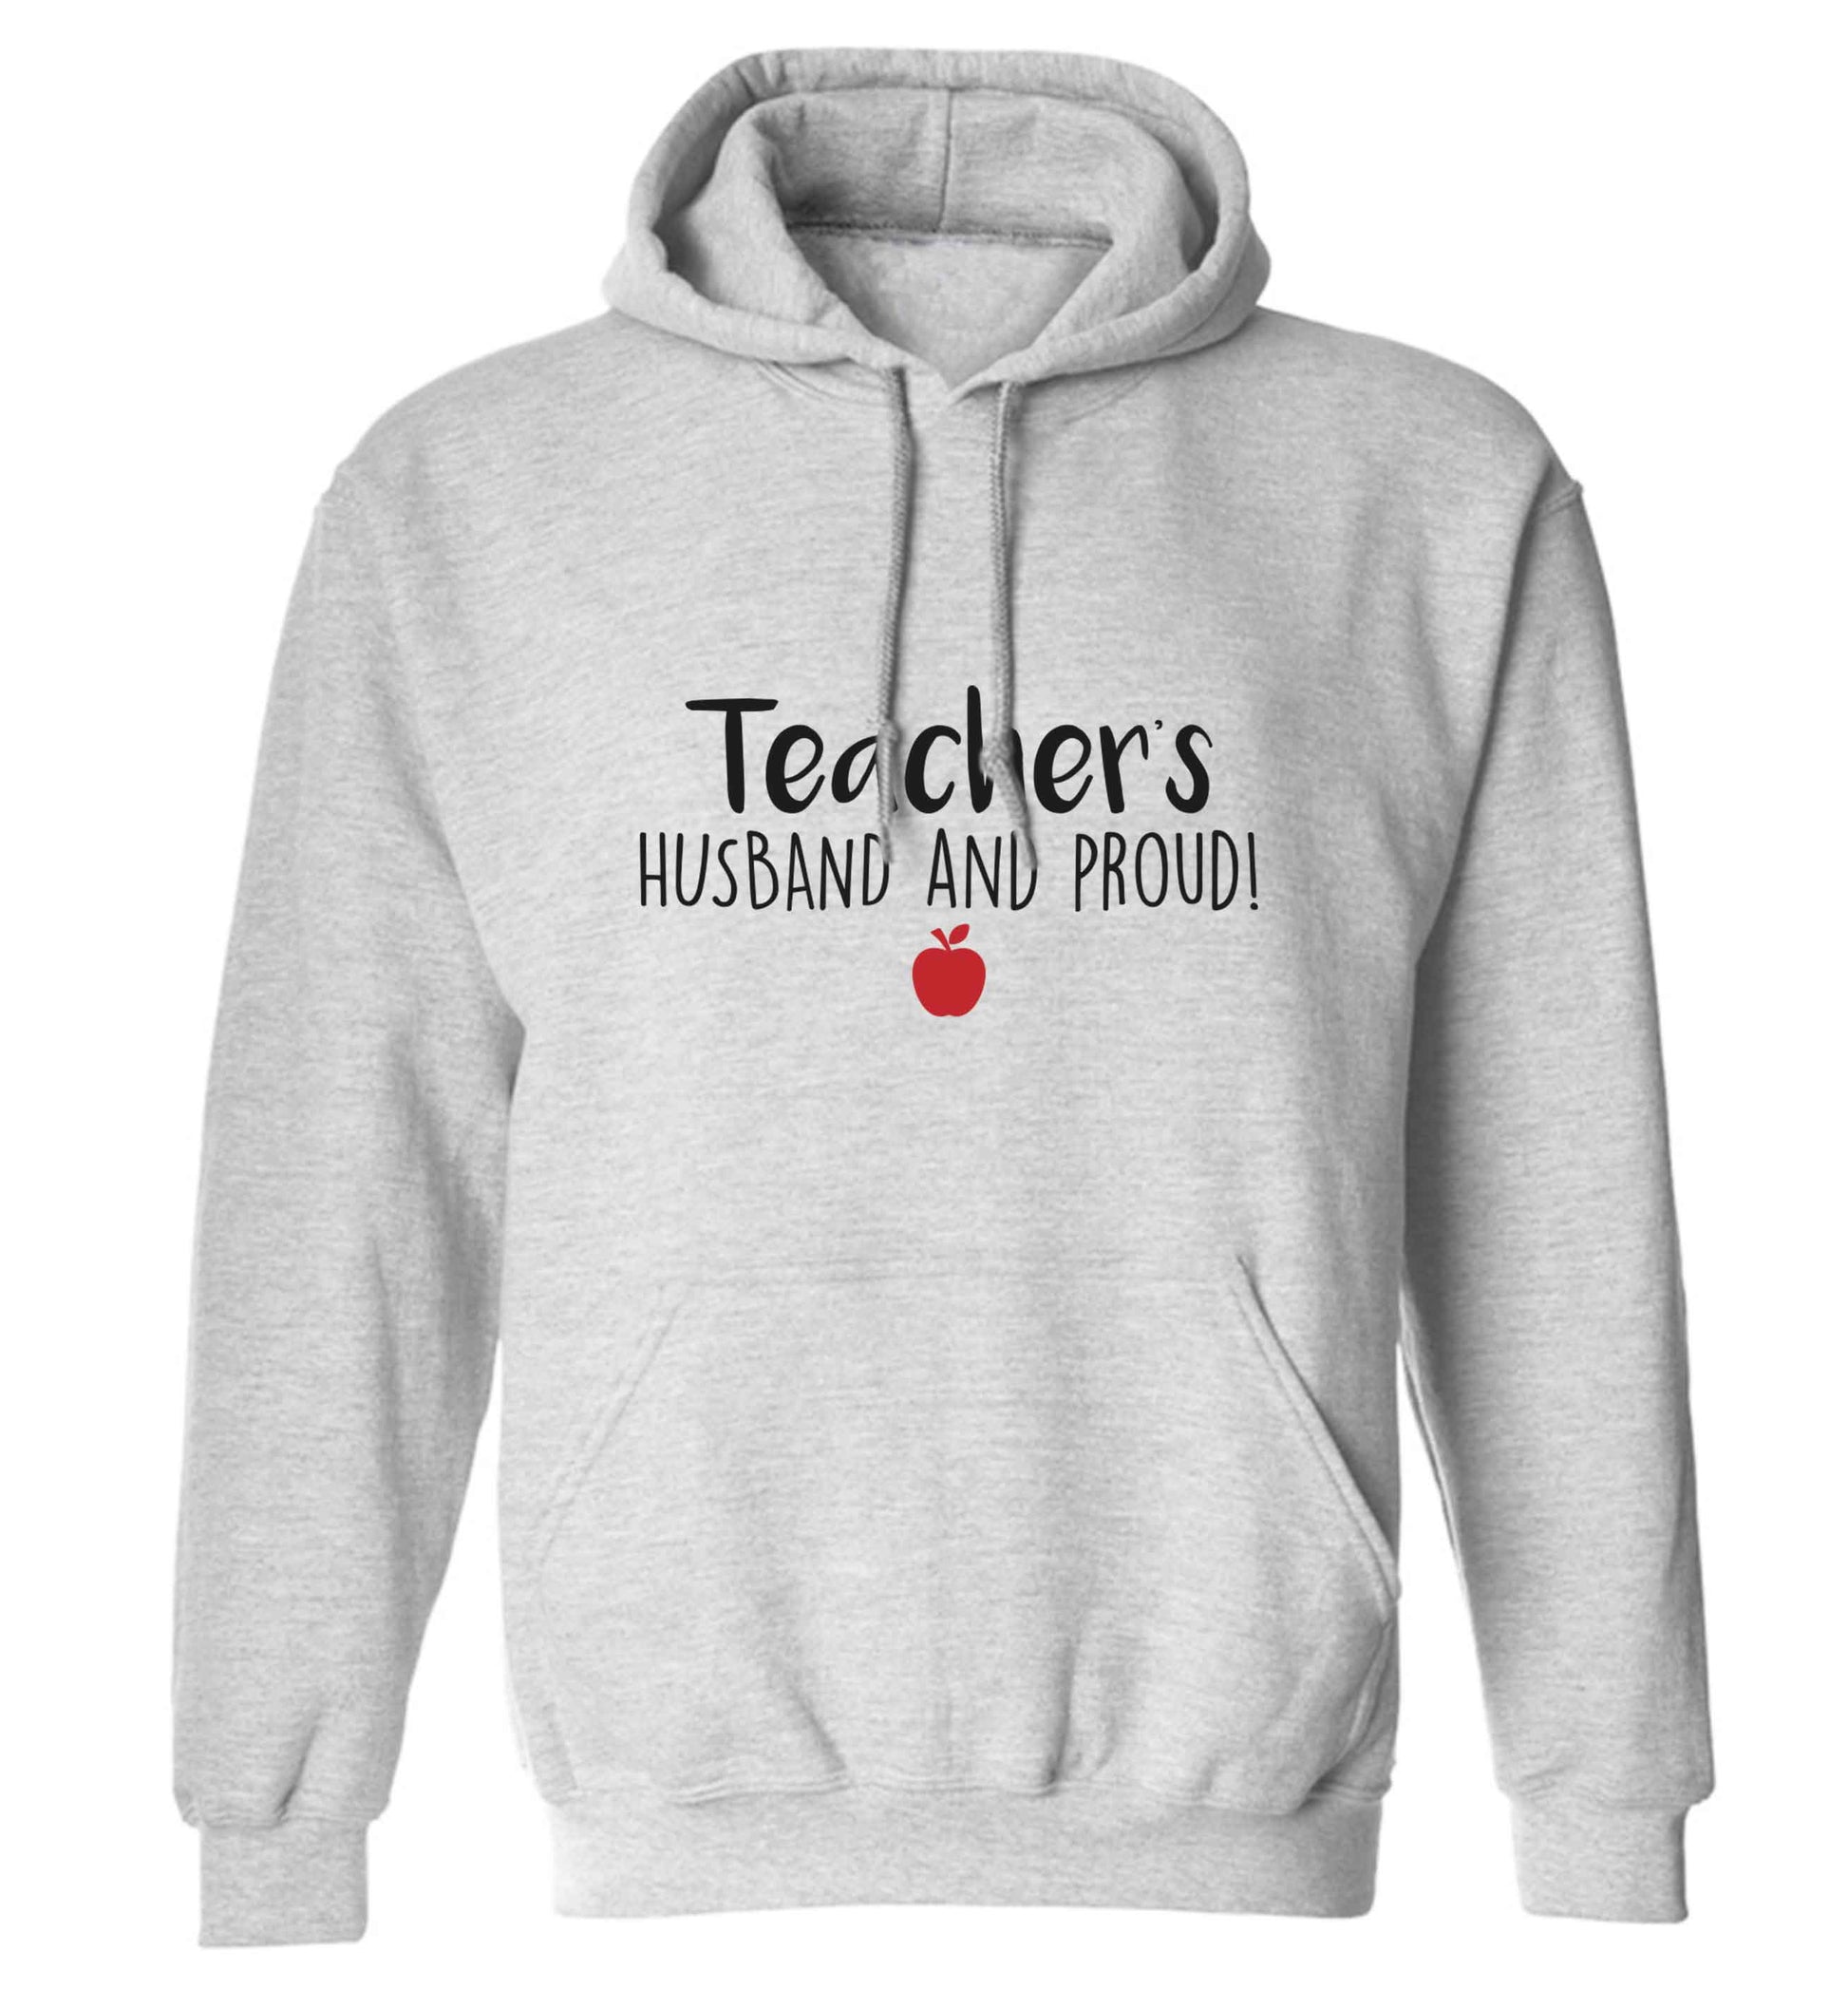 Teachers husband and proud adults unisex grey hoodie 2XL